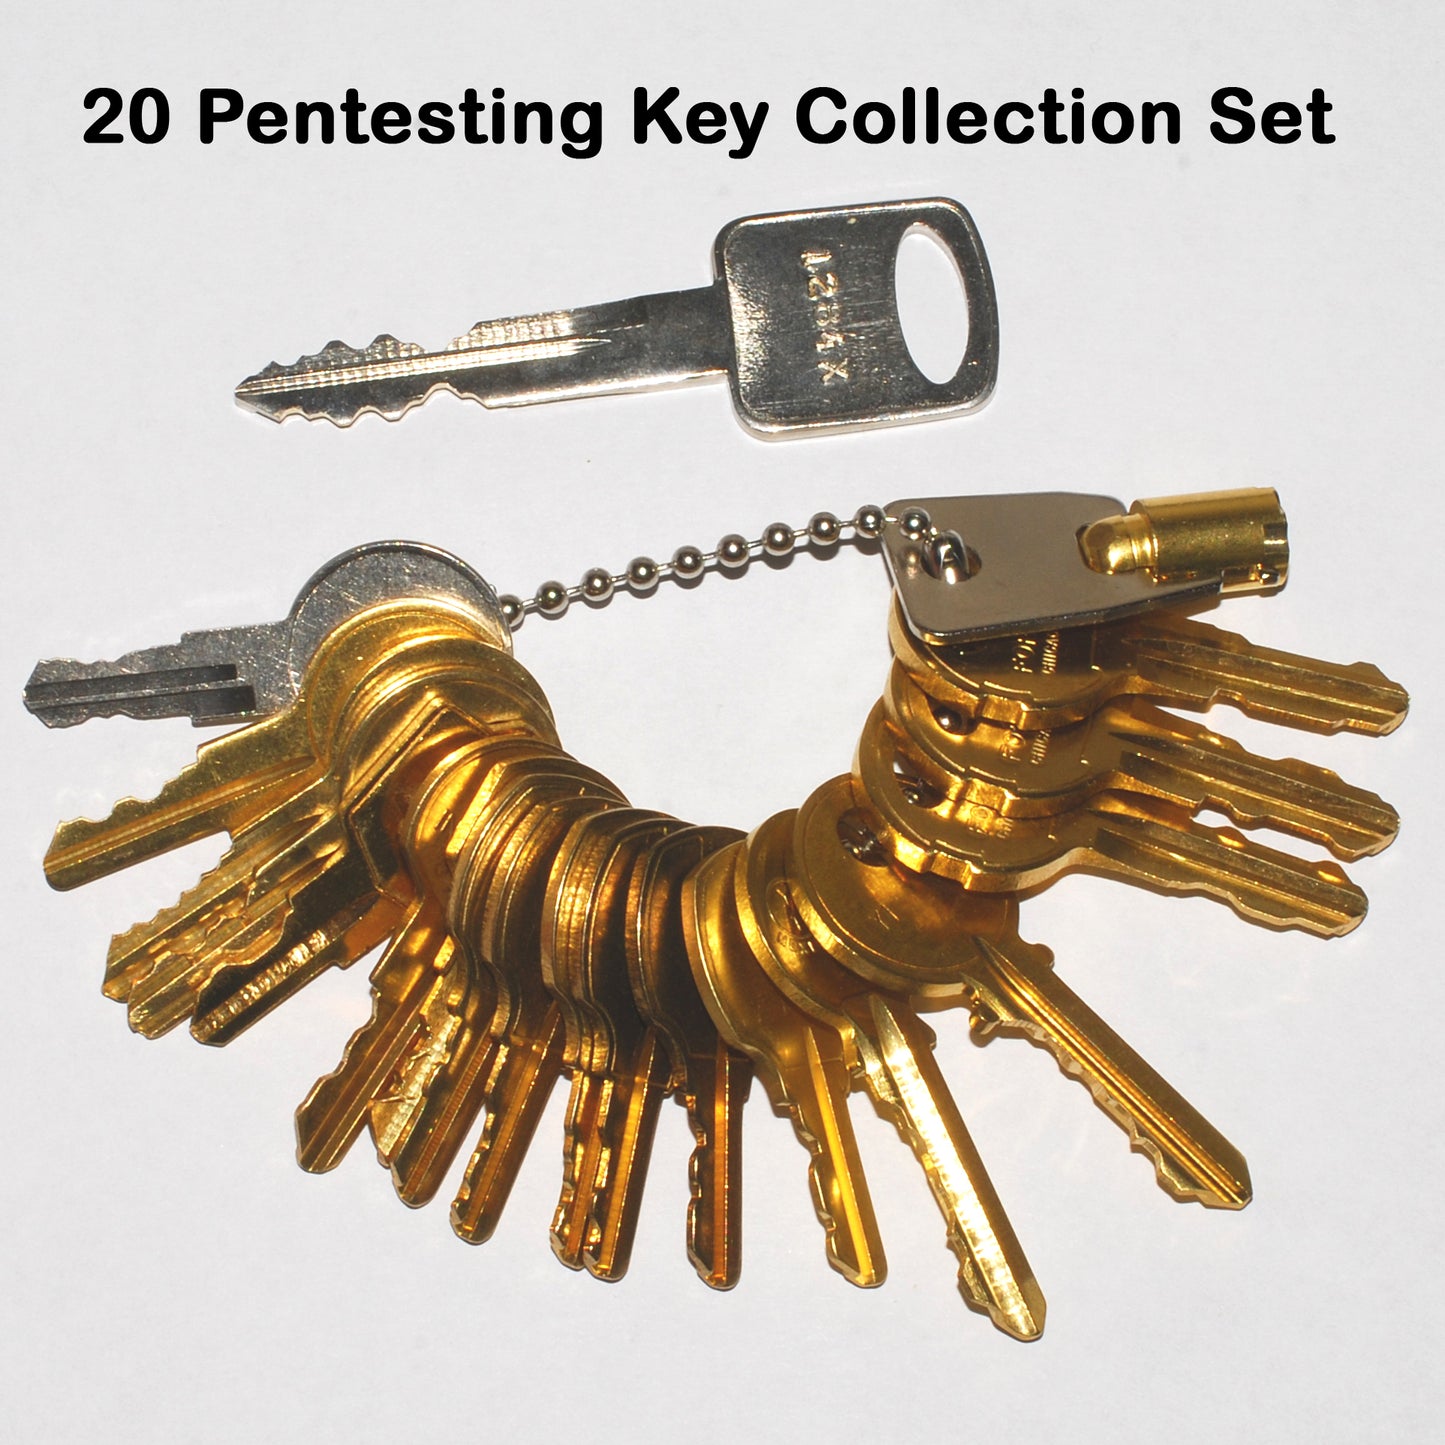 20 Pentesting Key Collection Set